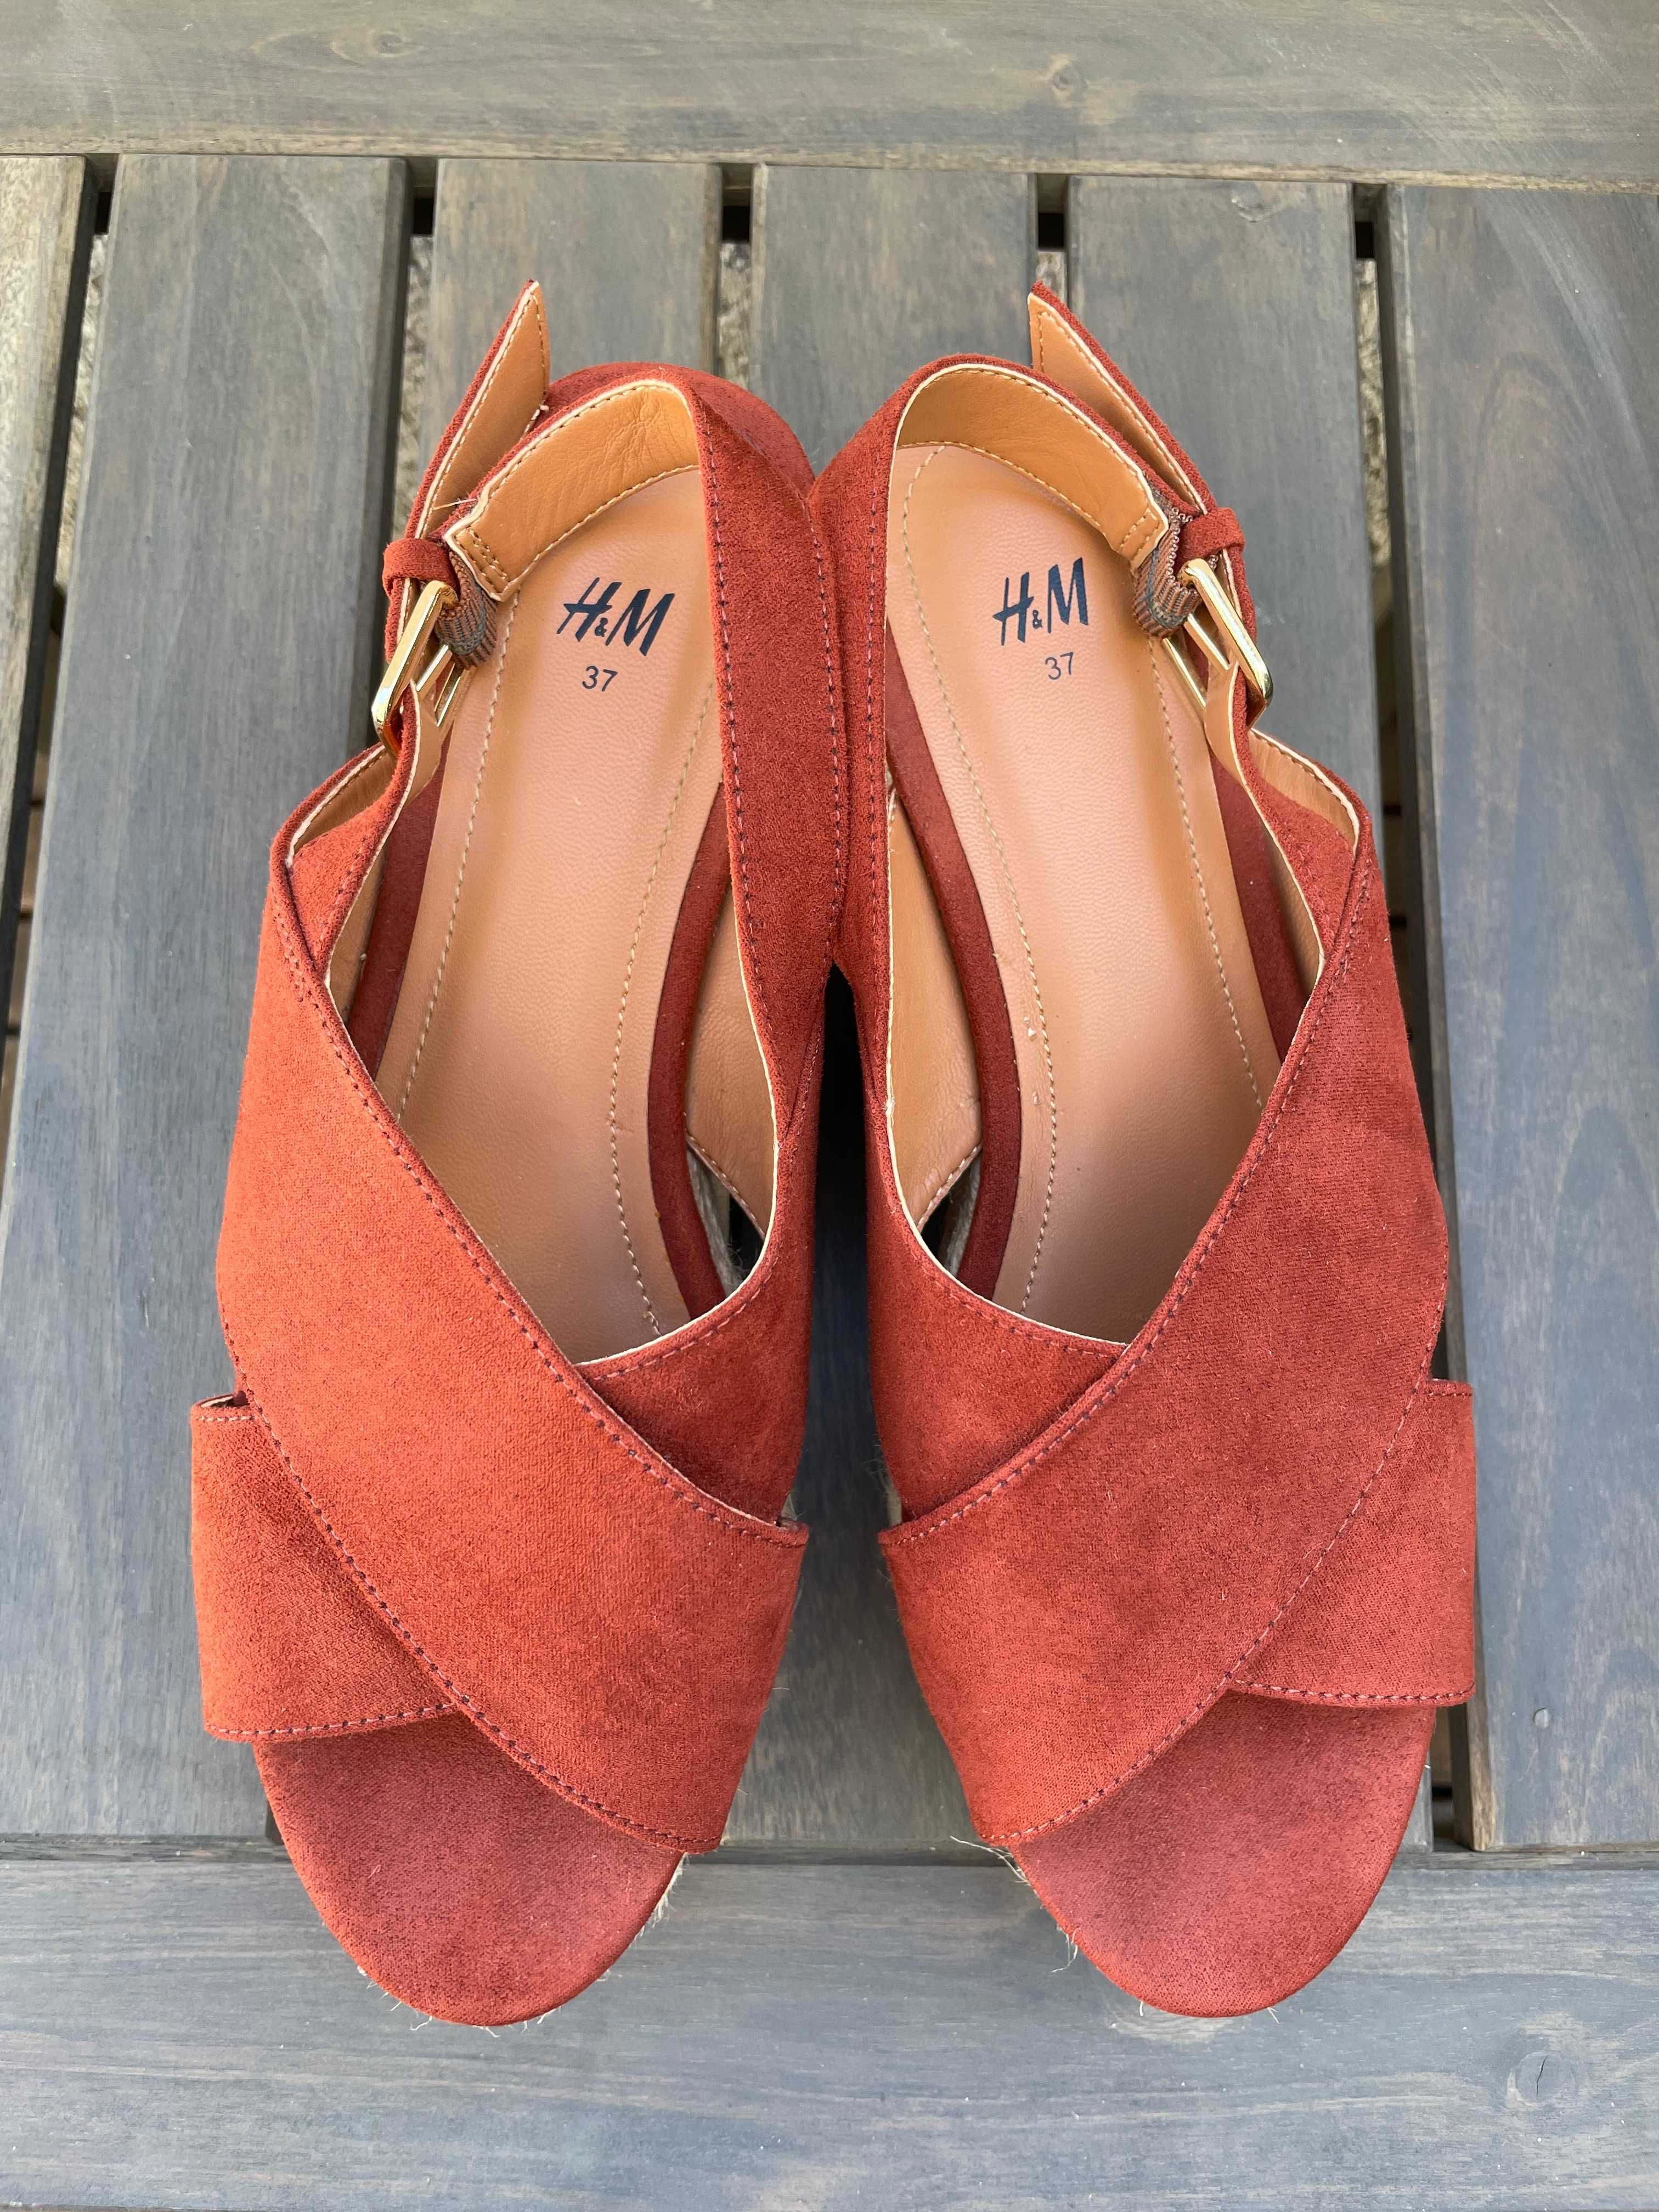 Sandale cu platforma - H&M, 37